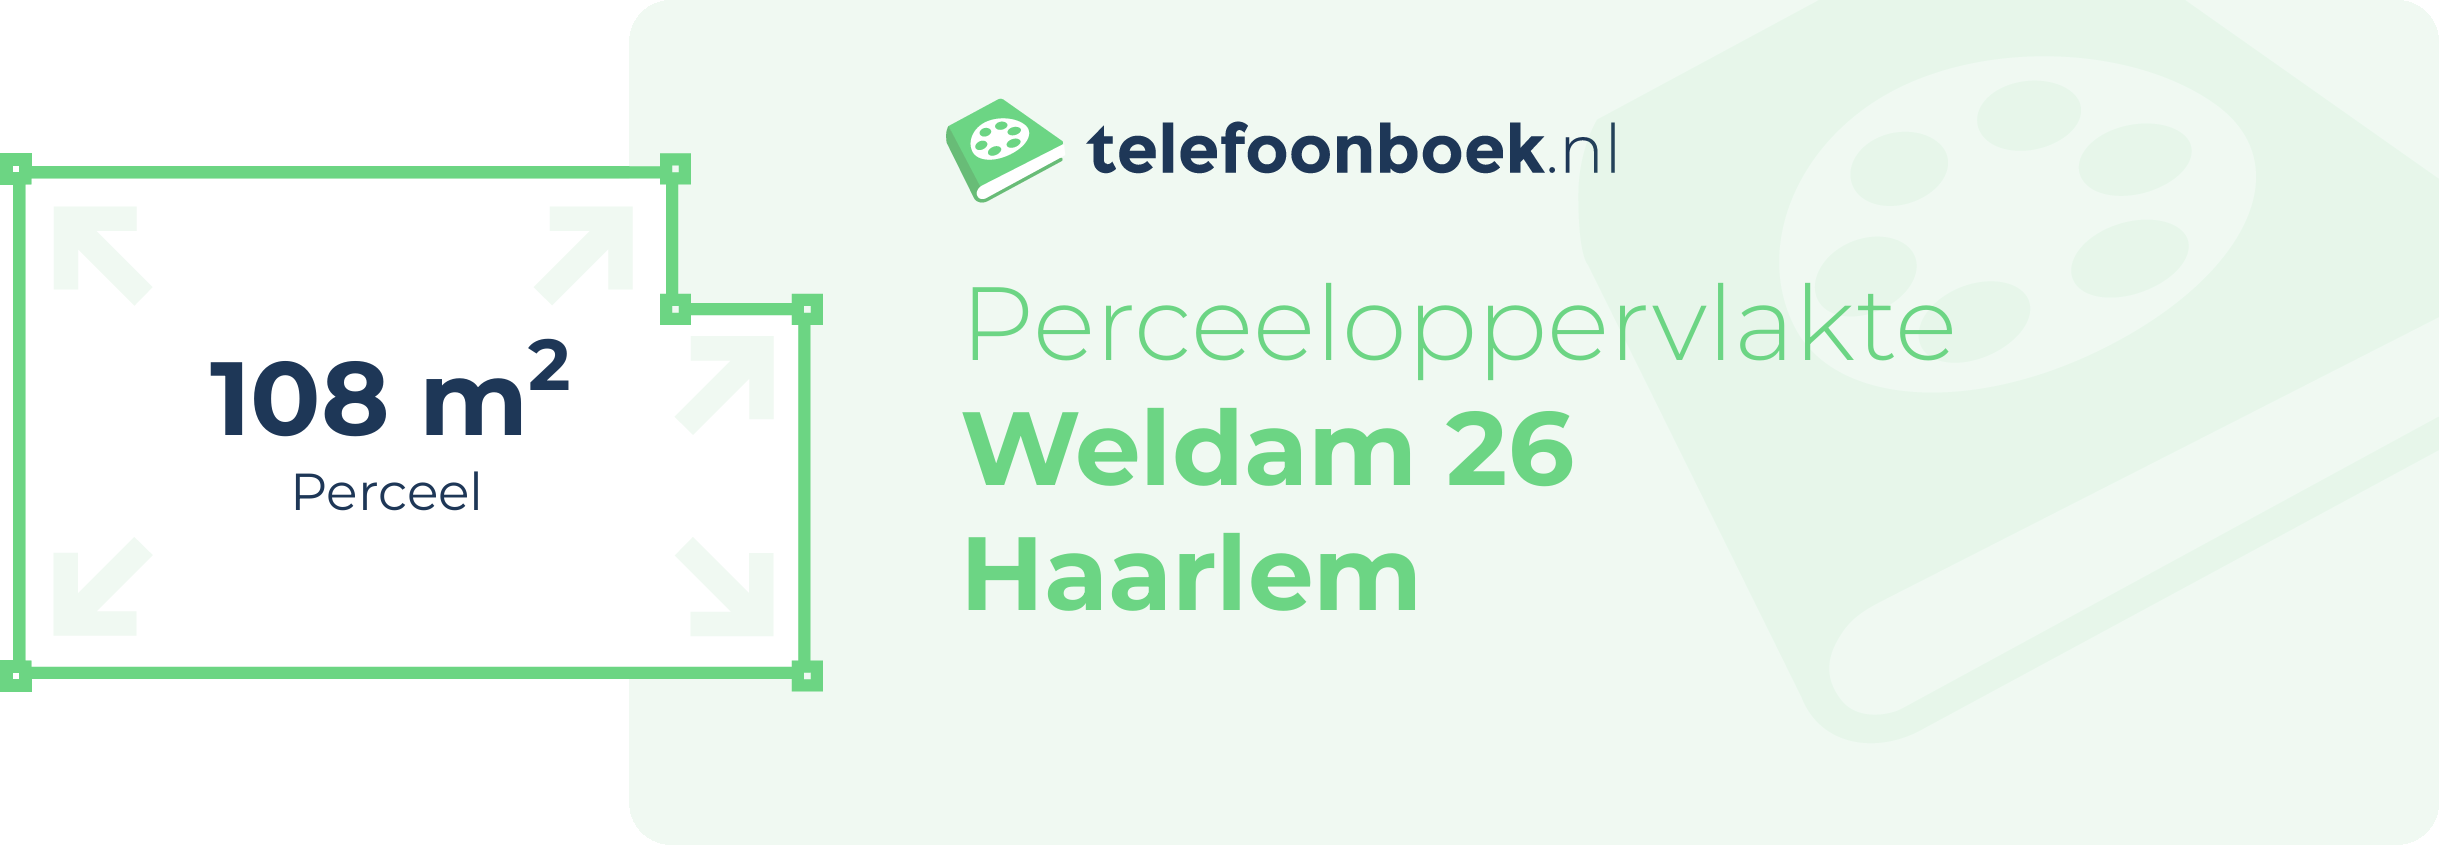 Perceeloppervlakte Weldam 26 Haarlem